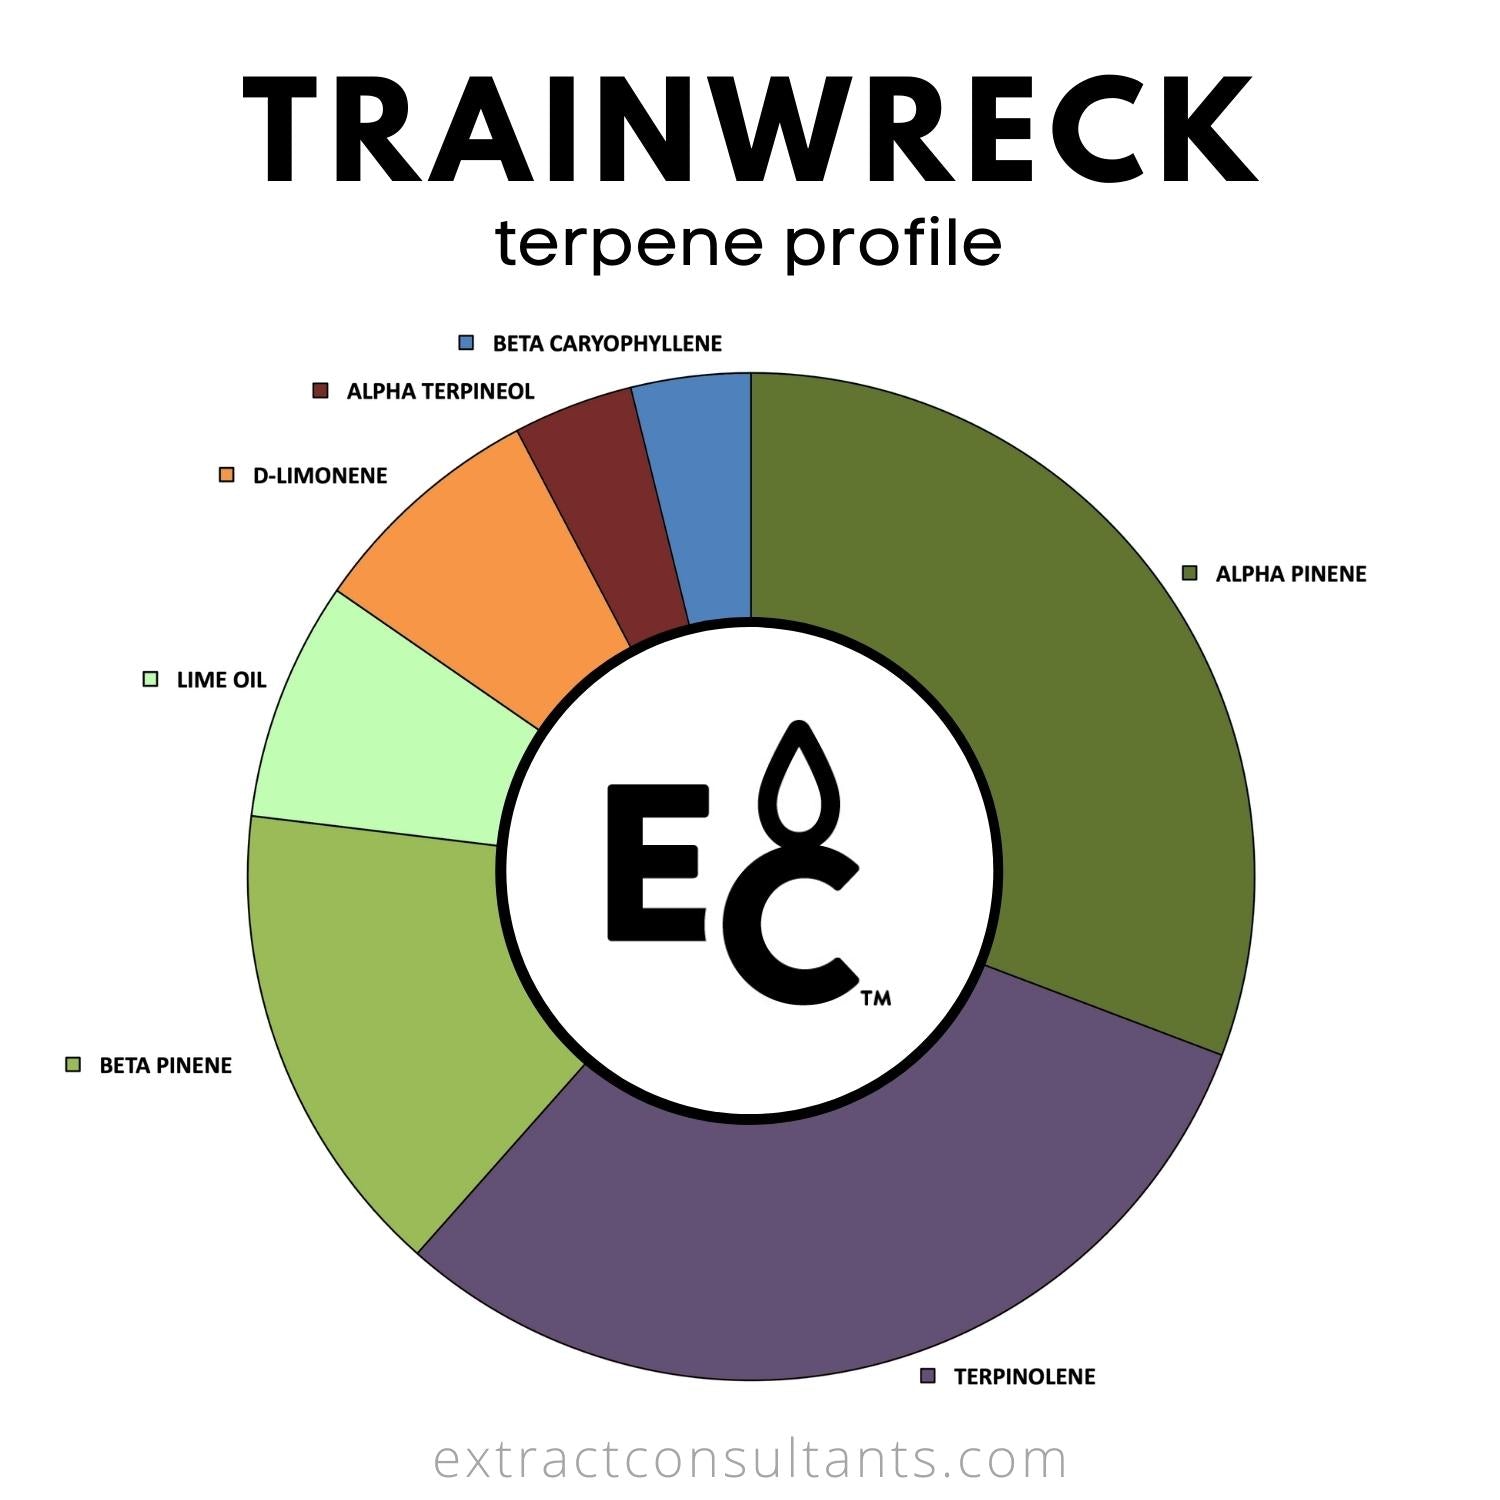 Trainwreck TTB Approved Terpene Flavor